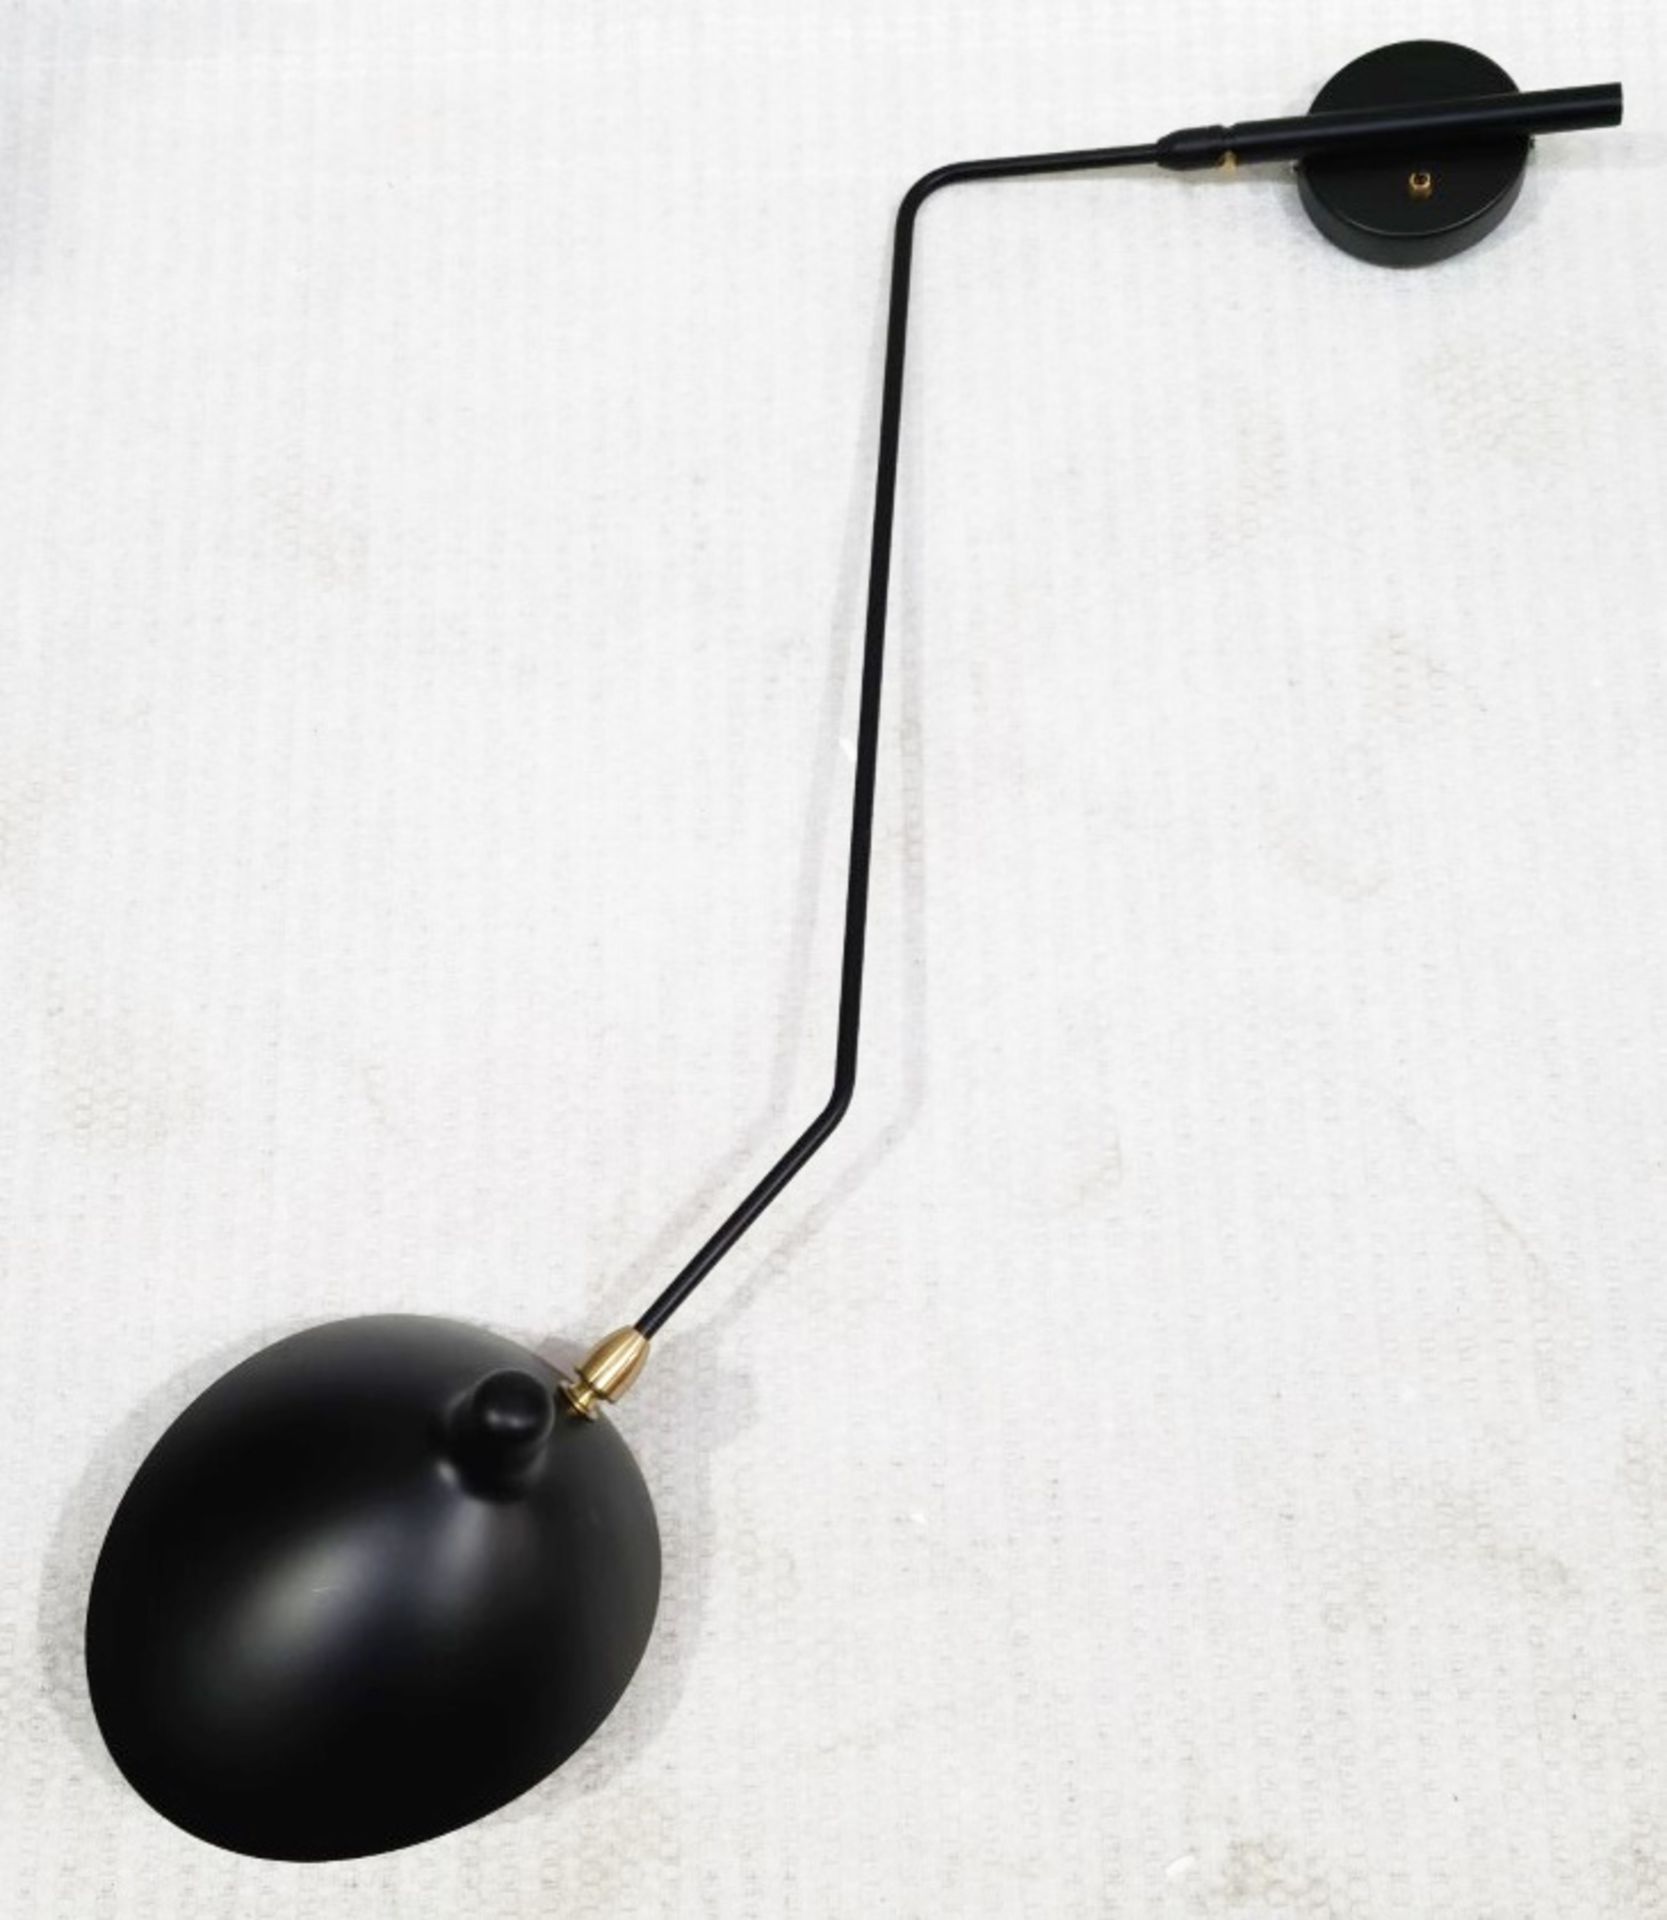 1 x BLUESUNTREE 'Serge Mouille' Black Wall Light W/ Horizontal Adjustable Arm & Rotatable Lamp 80cm - Image 5 of 8